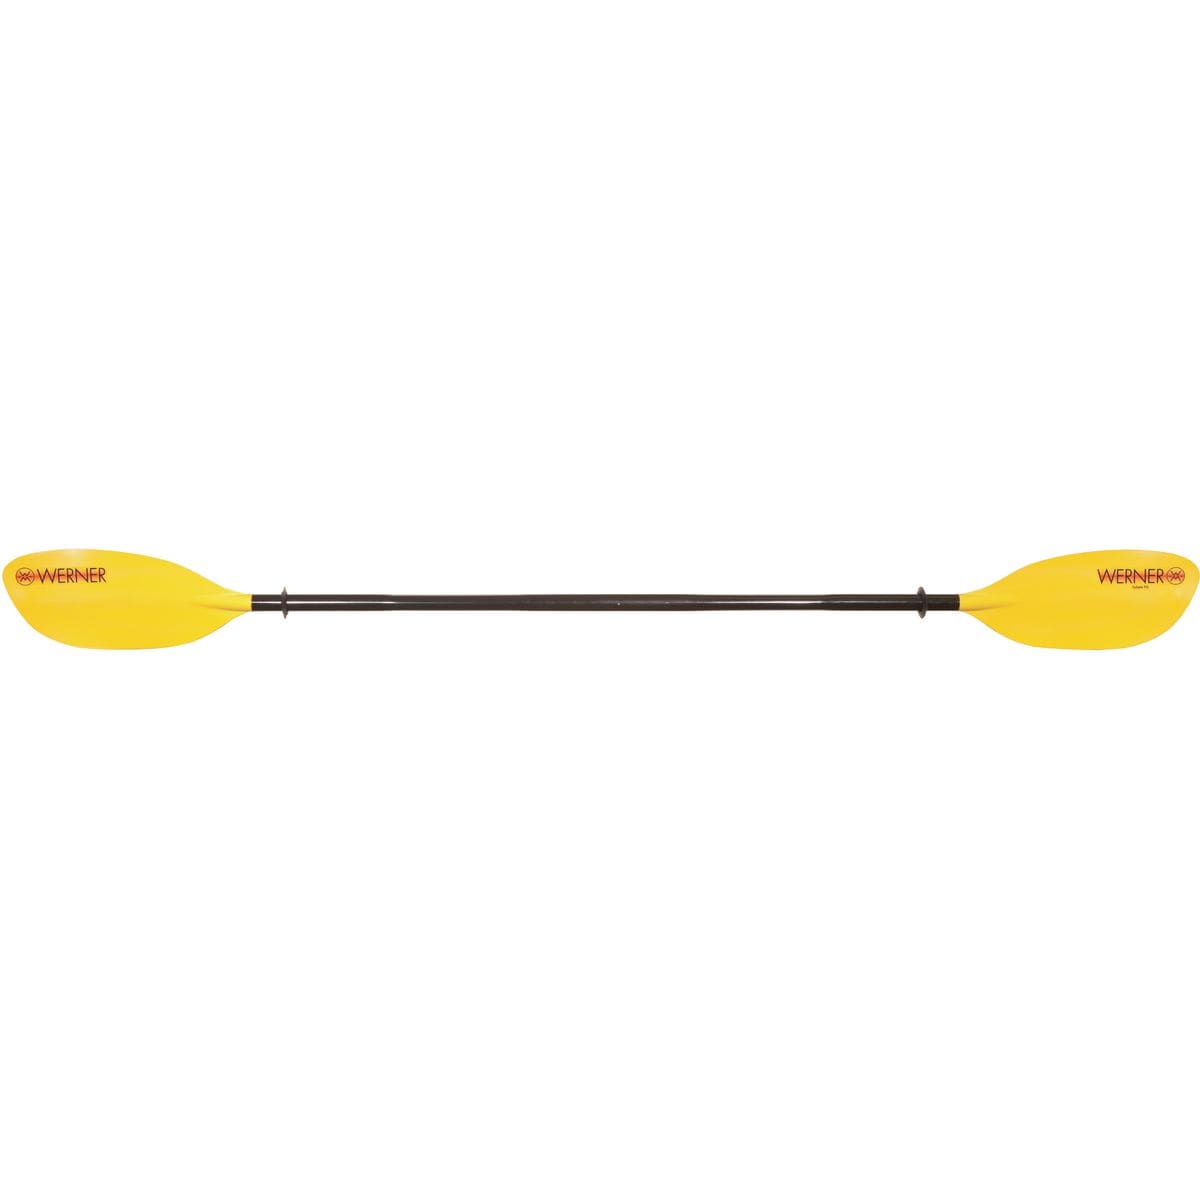 Werner Tybee FG 2-Piece Paddle - Straight Shaft